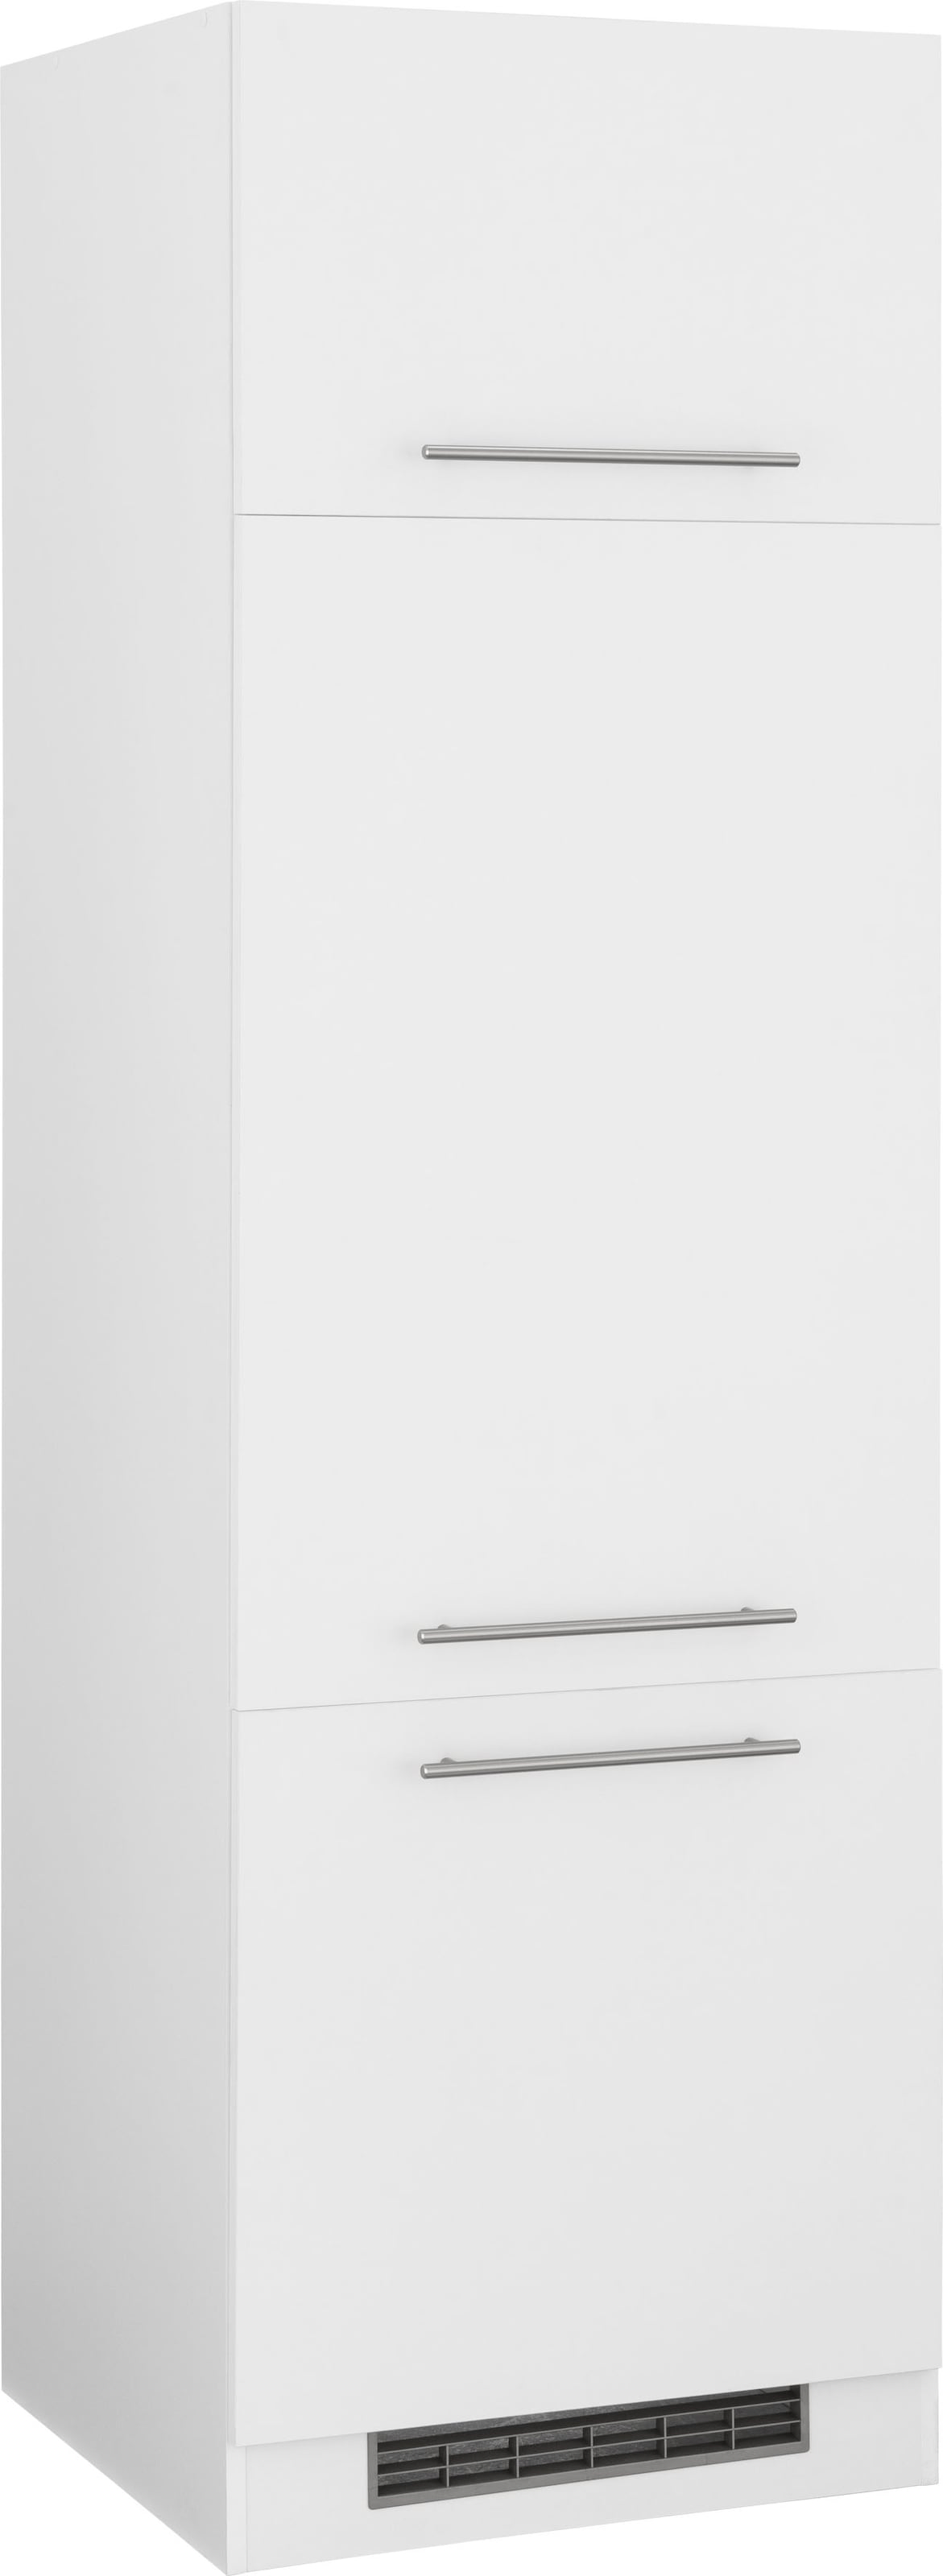 Kühlumbauschrank »Unna«, 60 cm breit, ohne E-Gerät